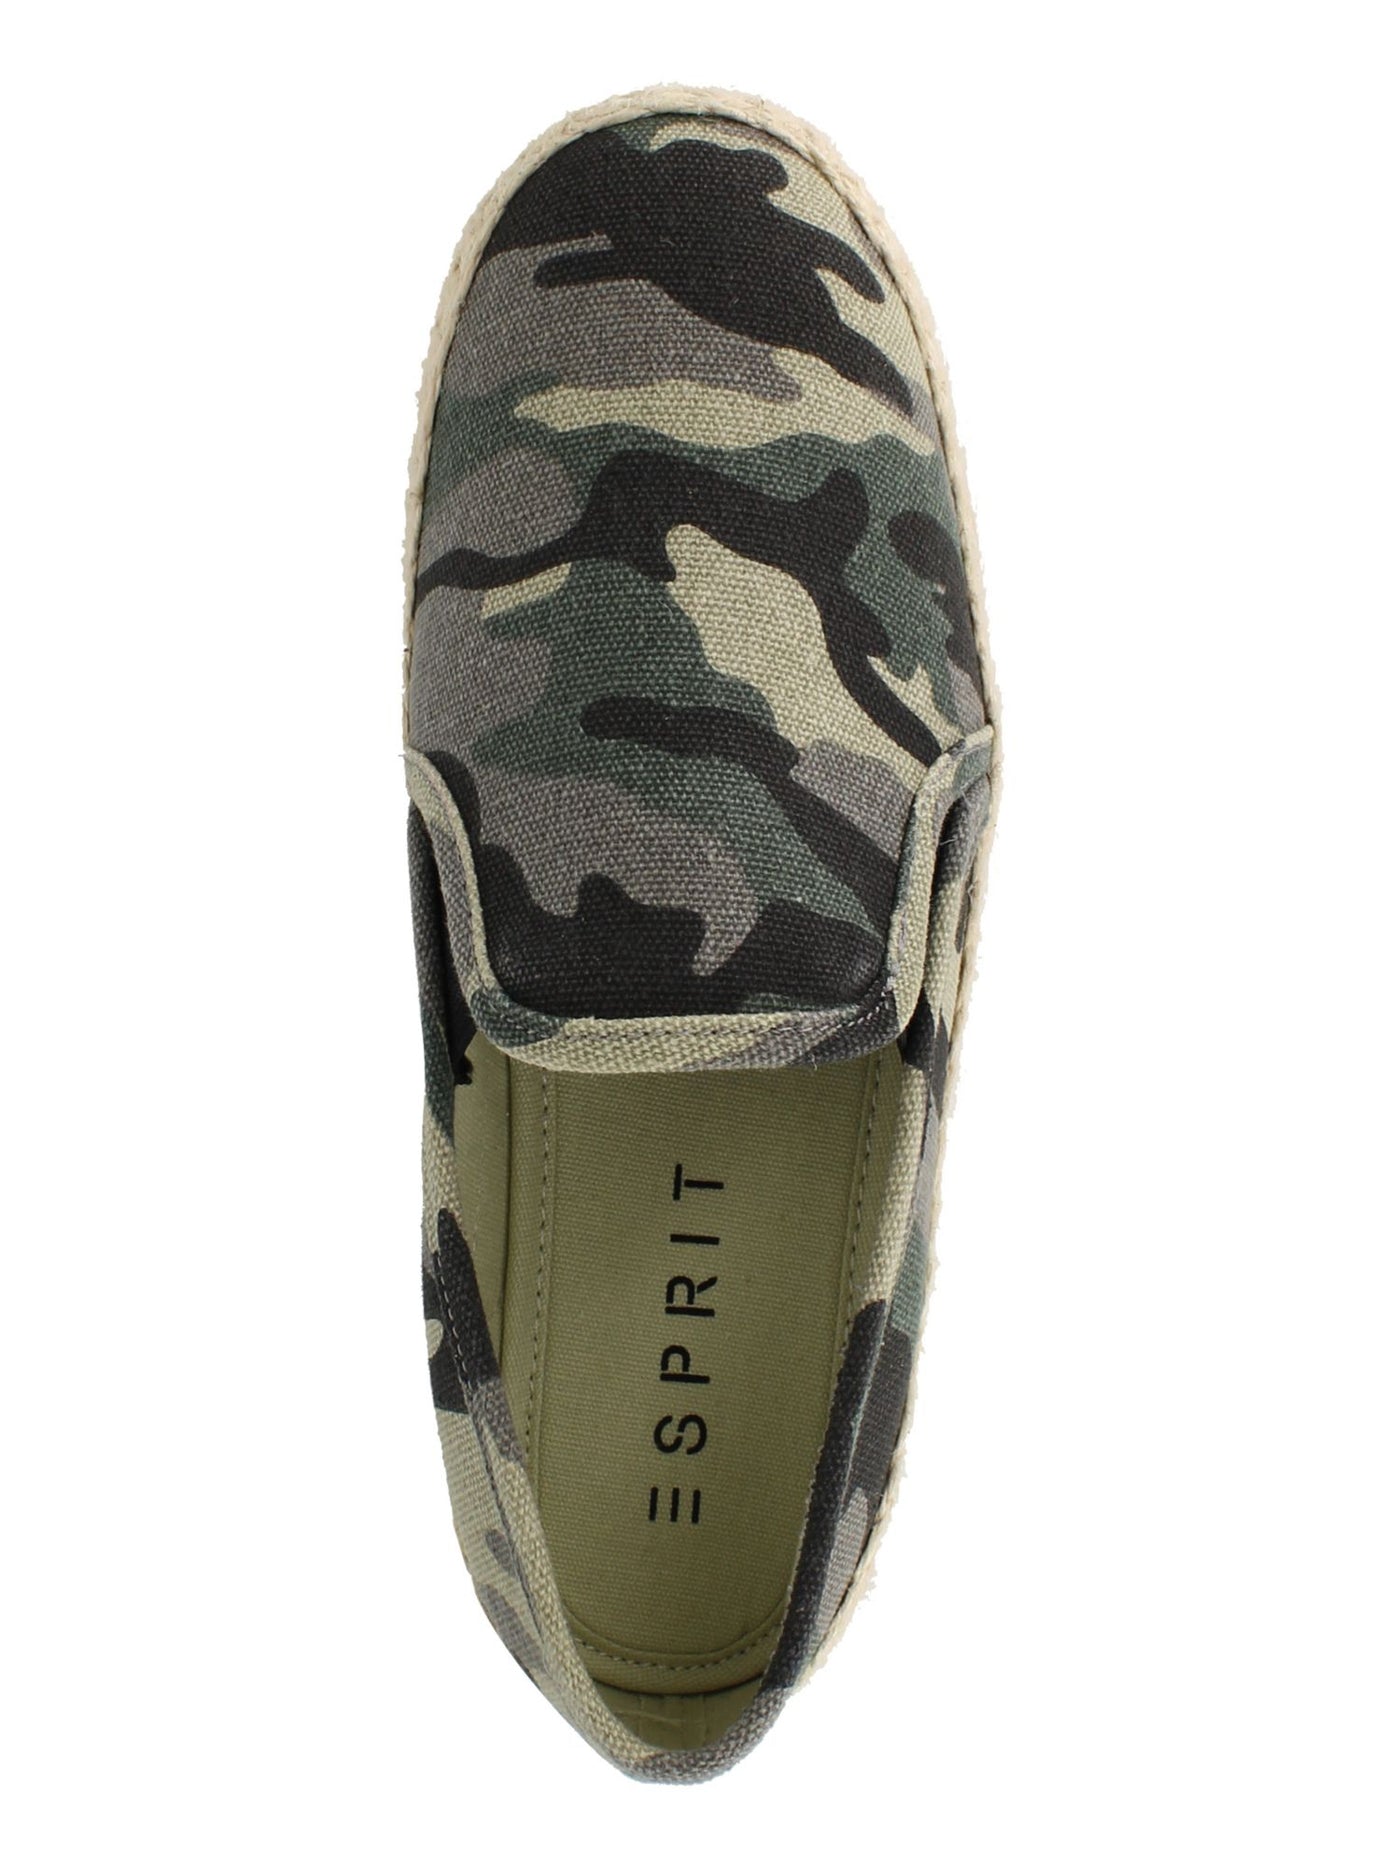 ESPRIT Womens Beige Camouflage 1/2" Espadrille Platform Side Goring Padded Erin Almond Toe Slip On Sneakers Shoes 6 M